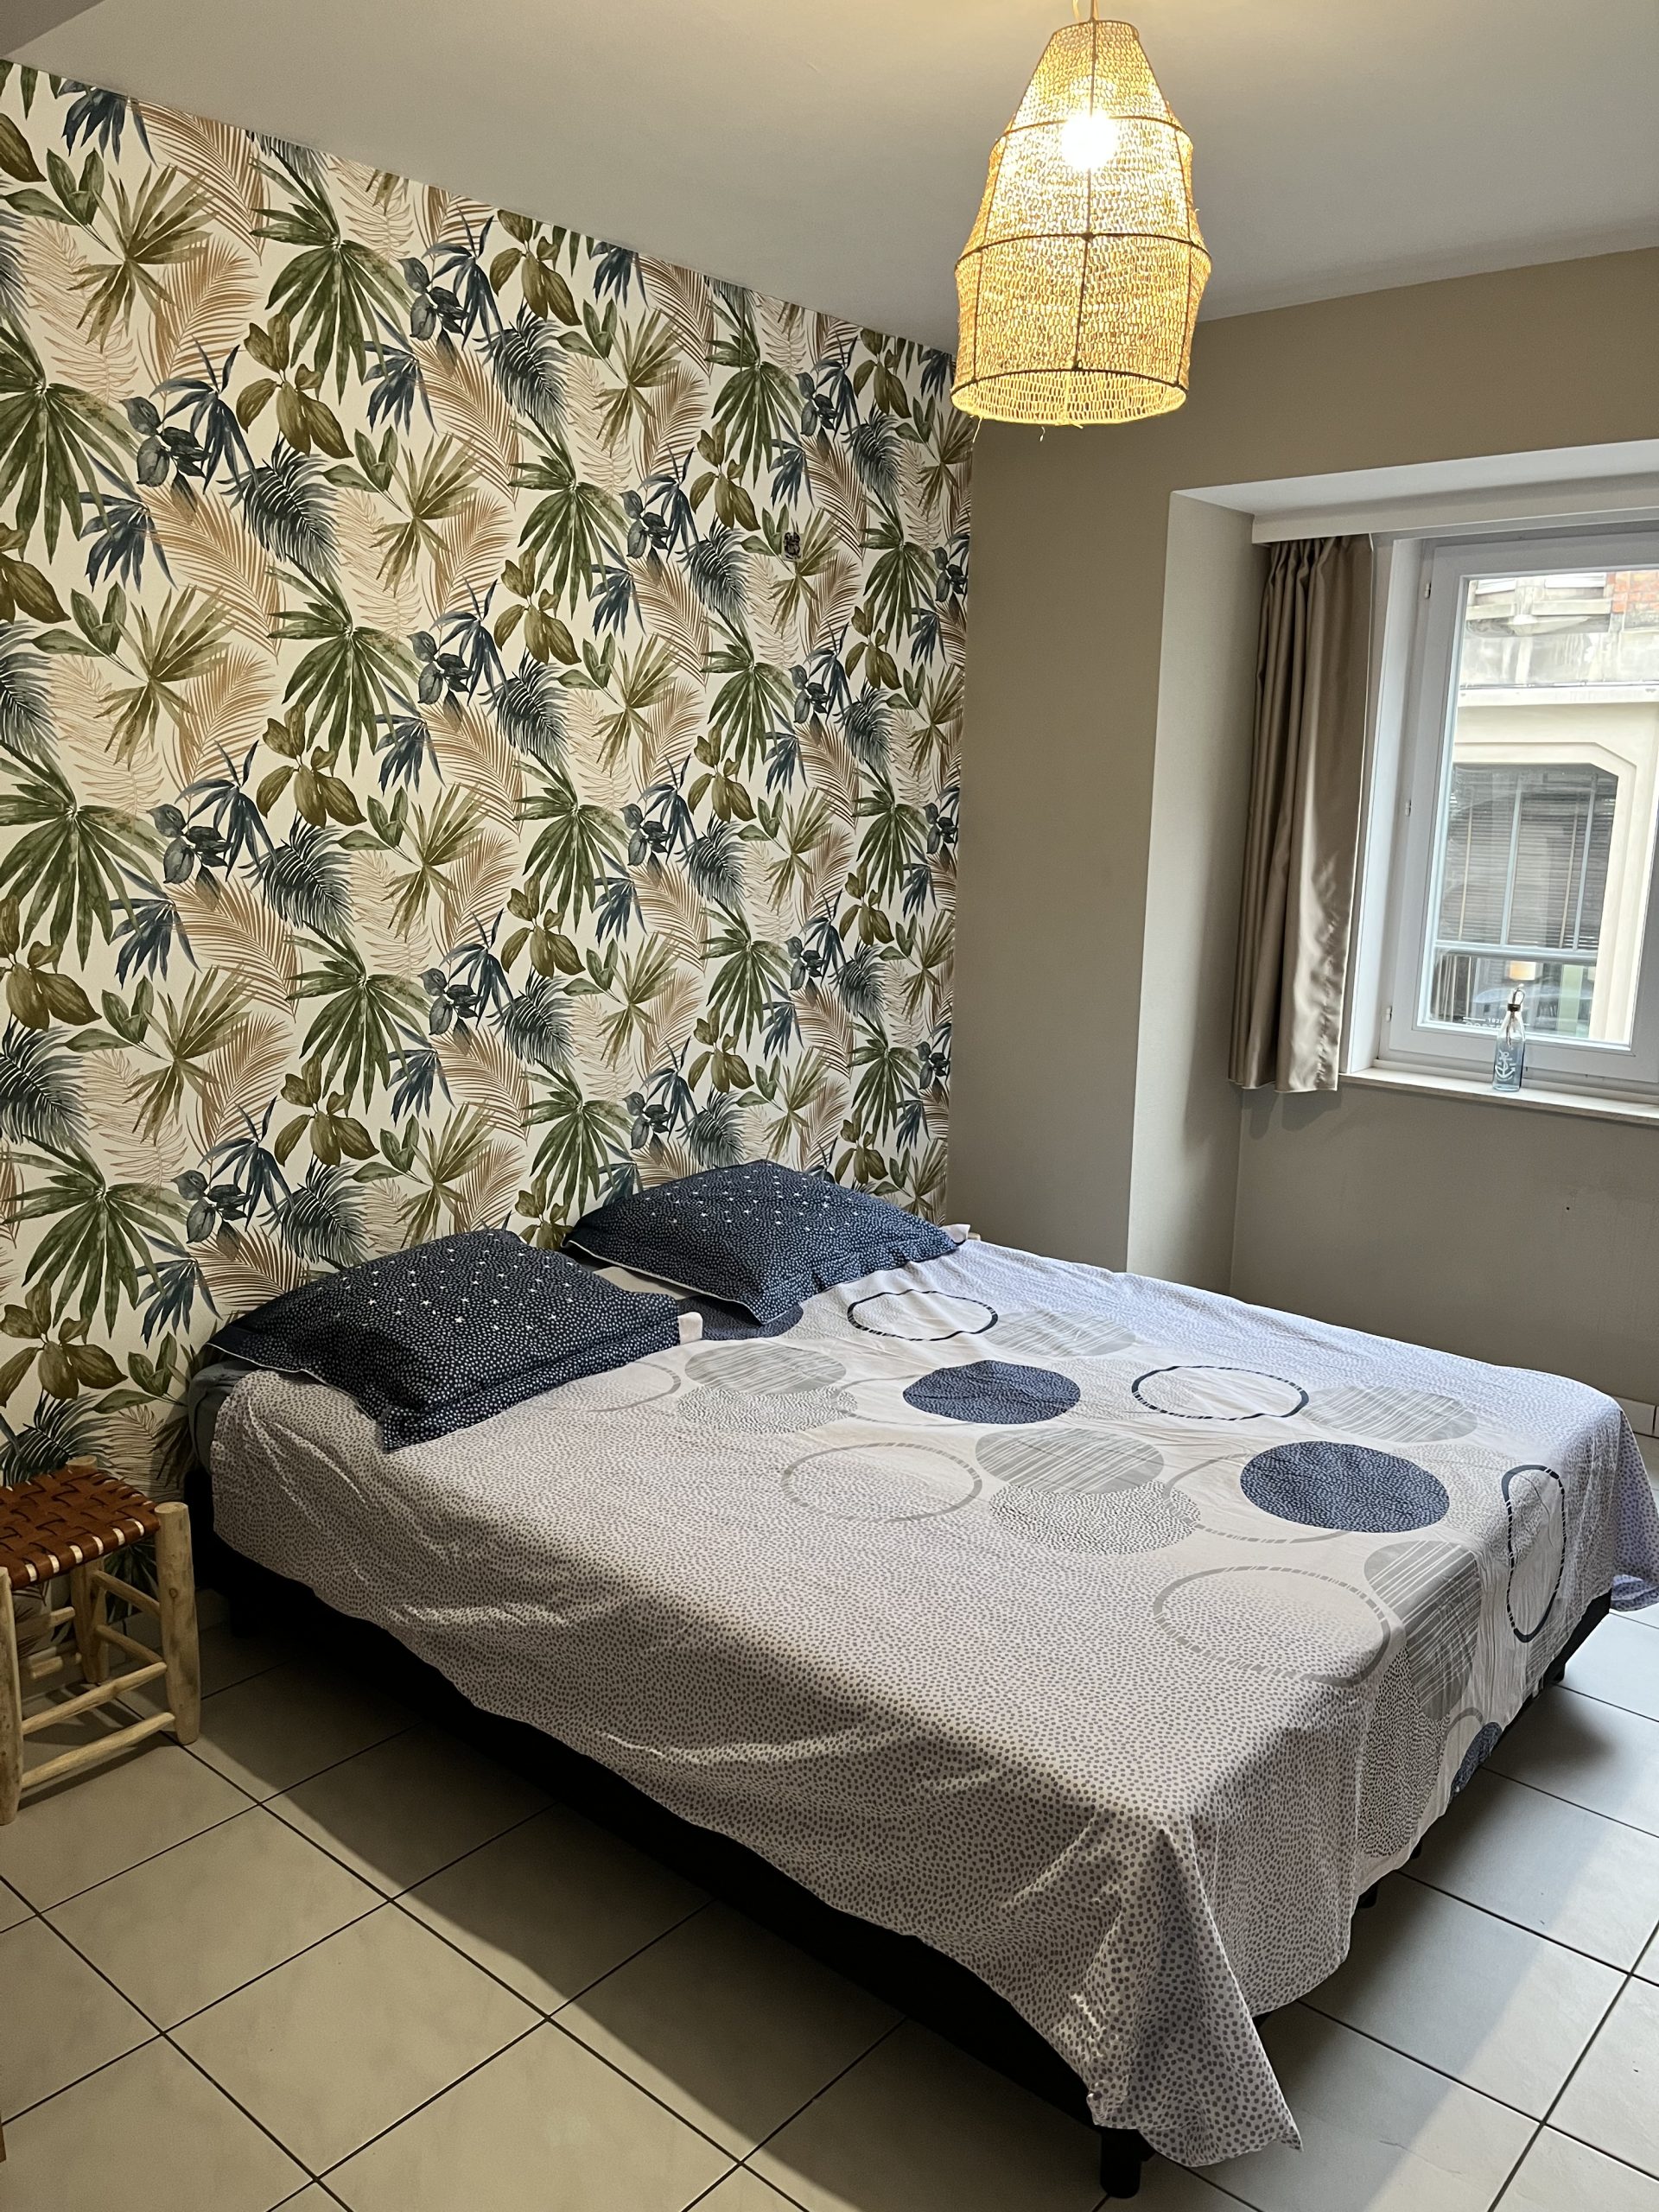 aparment-for rent-in-Oostende-bedroom